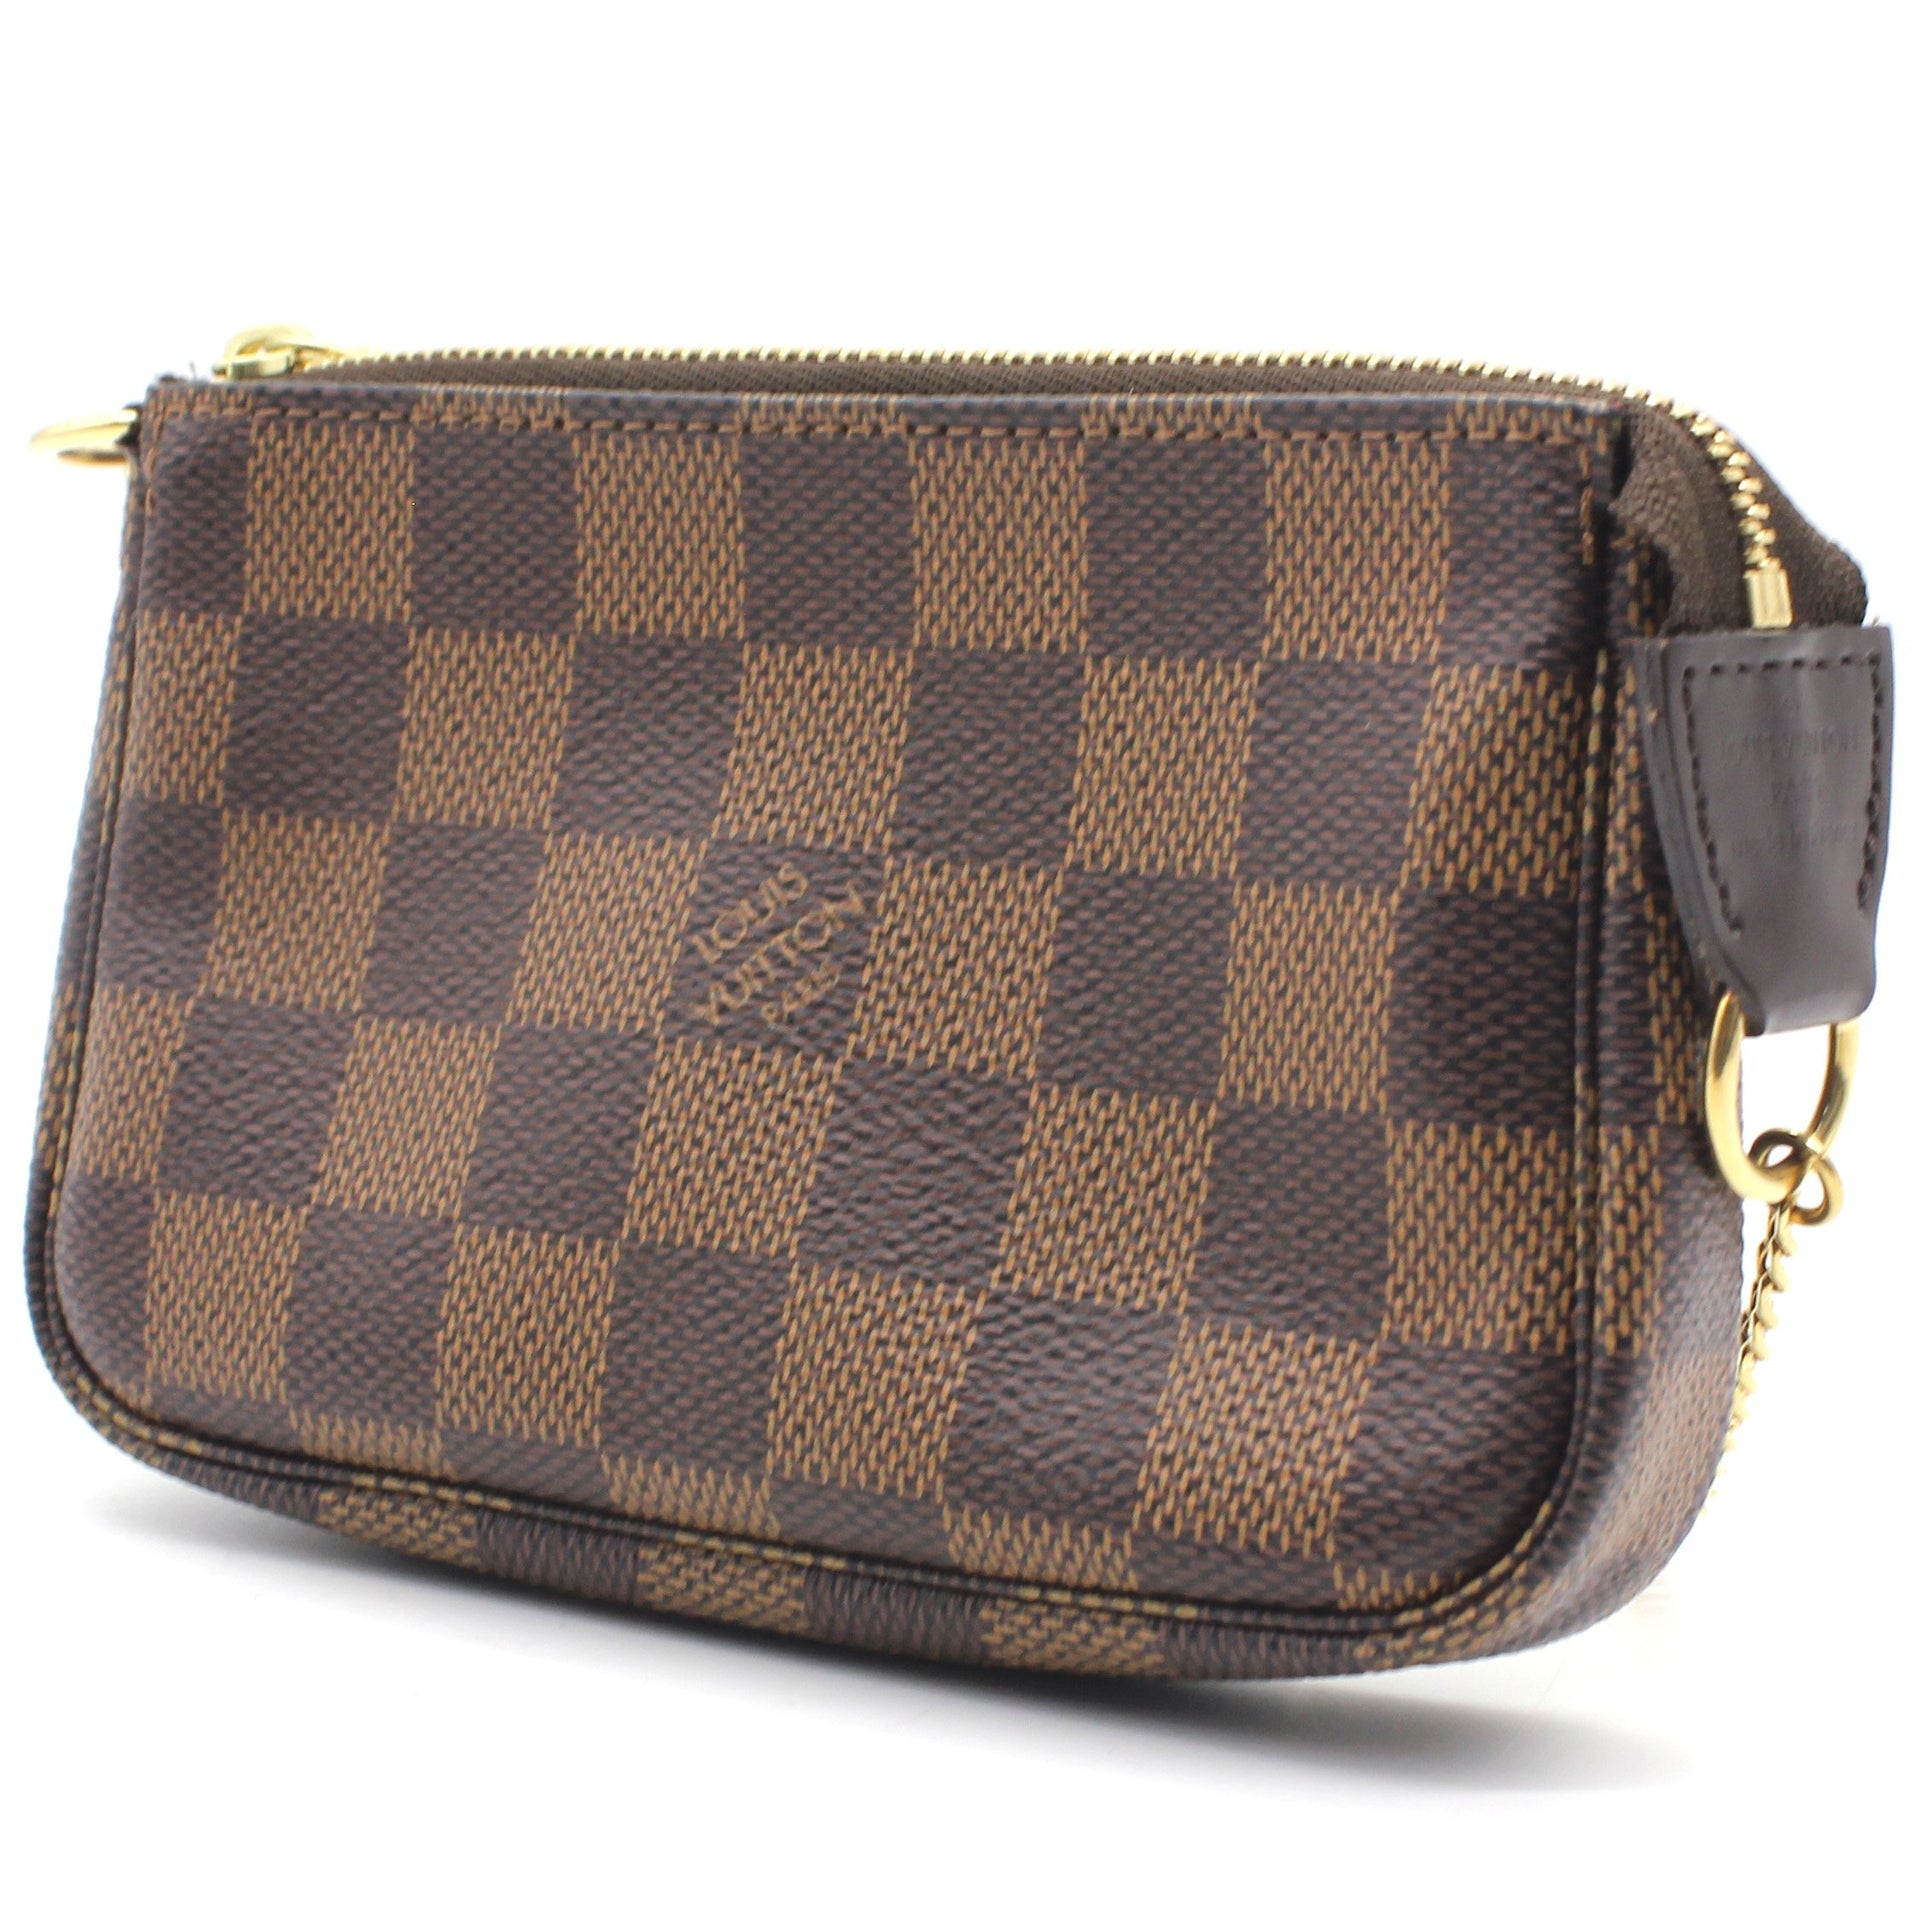 Louis Vuitton Small Bags  Handbags for Women  Authenticity Guaranteed   eBay